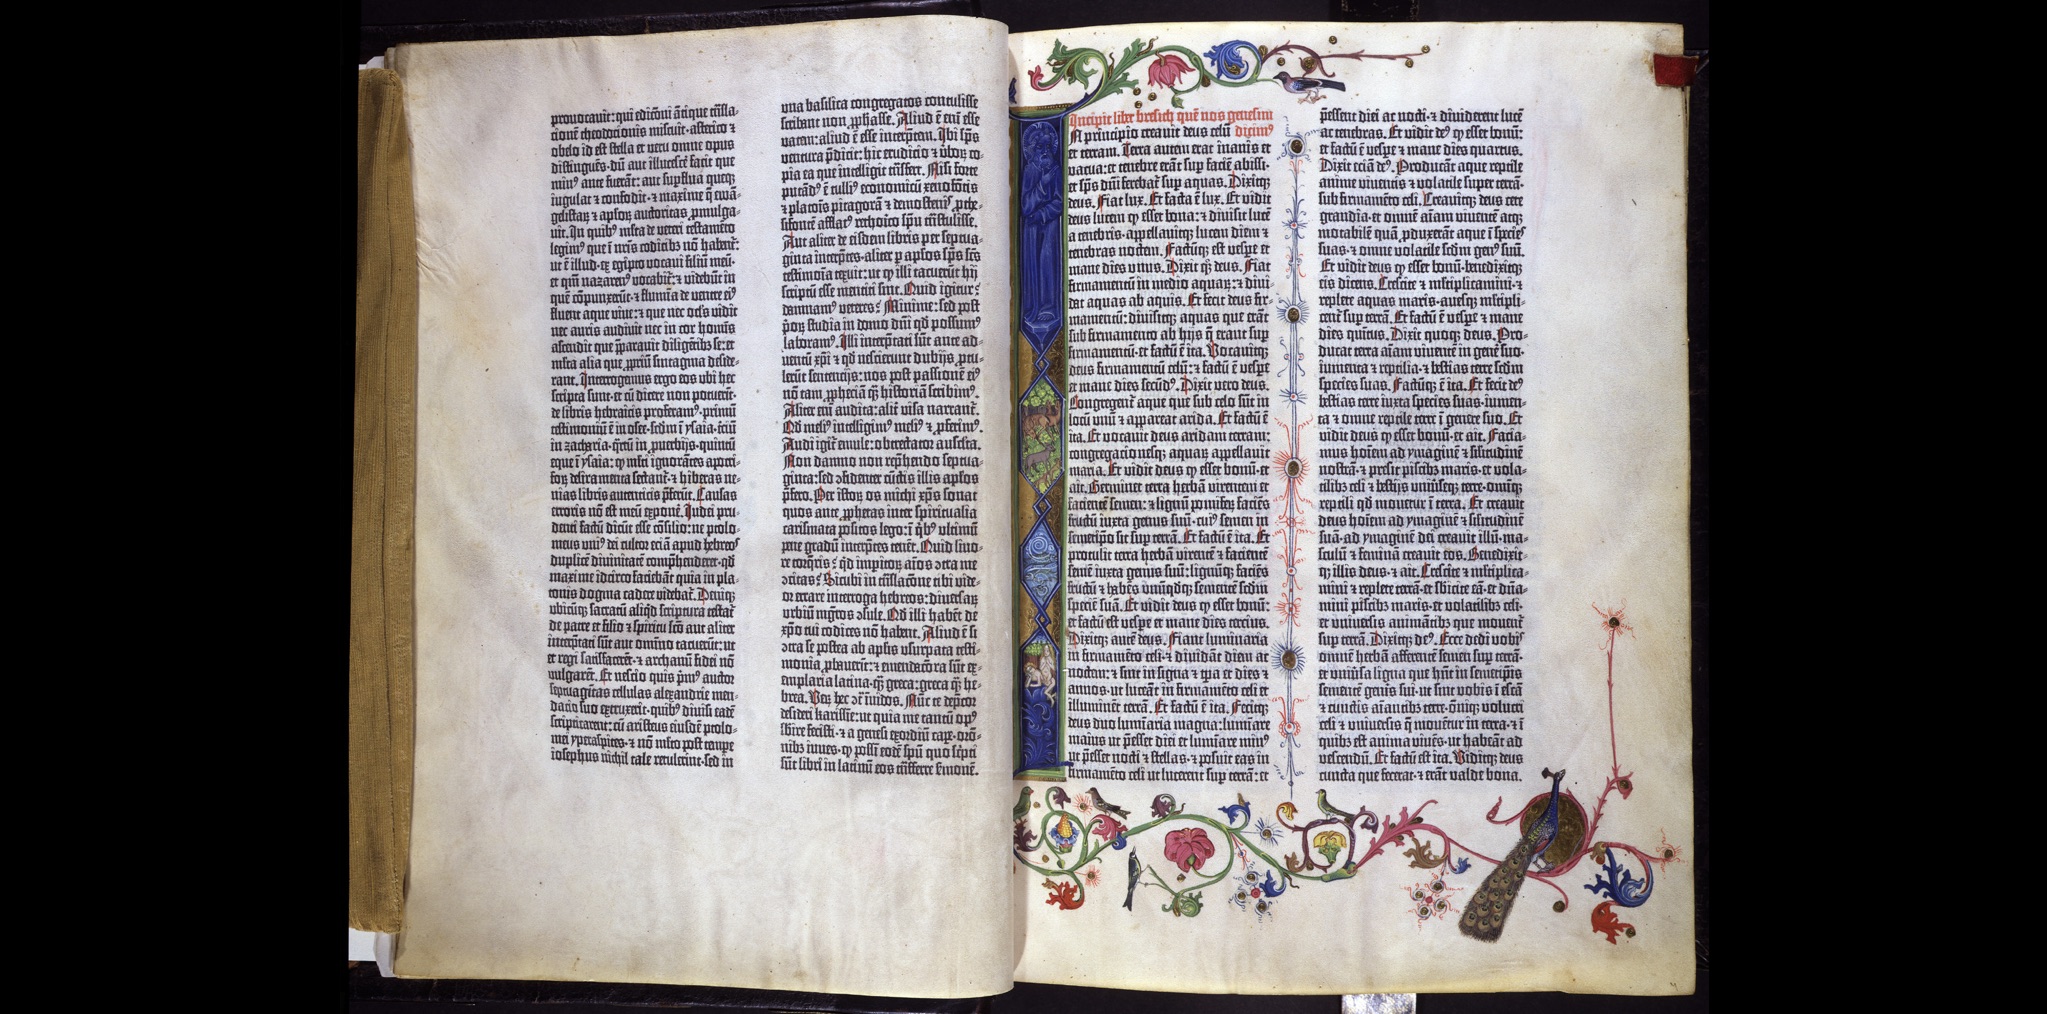 A Bíblia de Gutenberg, c. 1455 